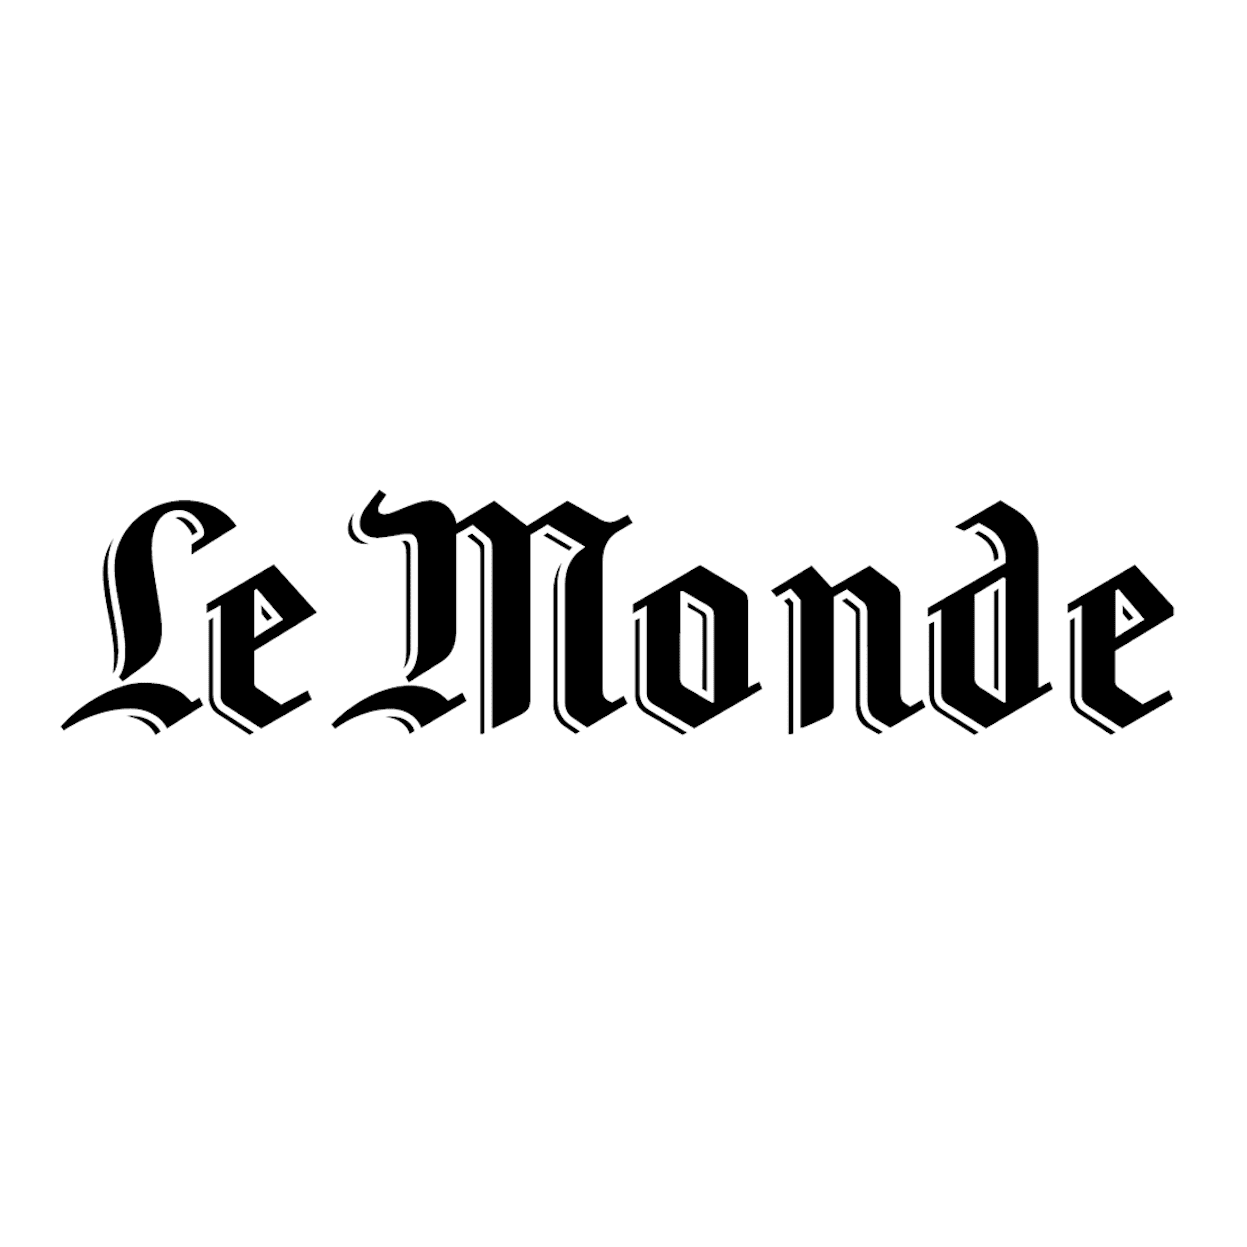 https://www.lafabriquedelacite.com/wp-content/uploads/2018/11/LeMonde.png